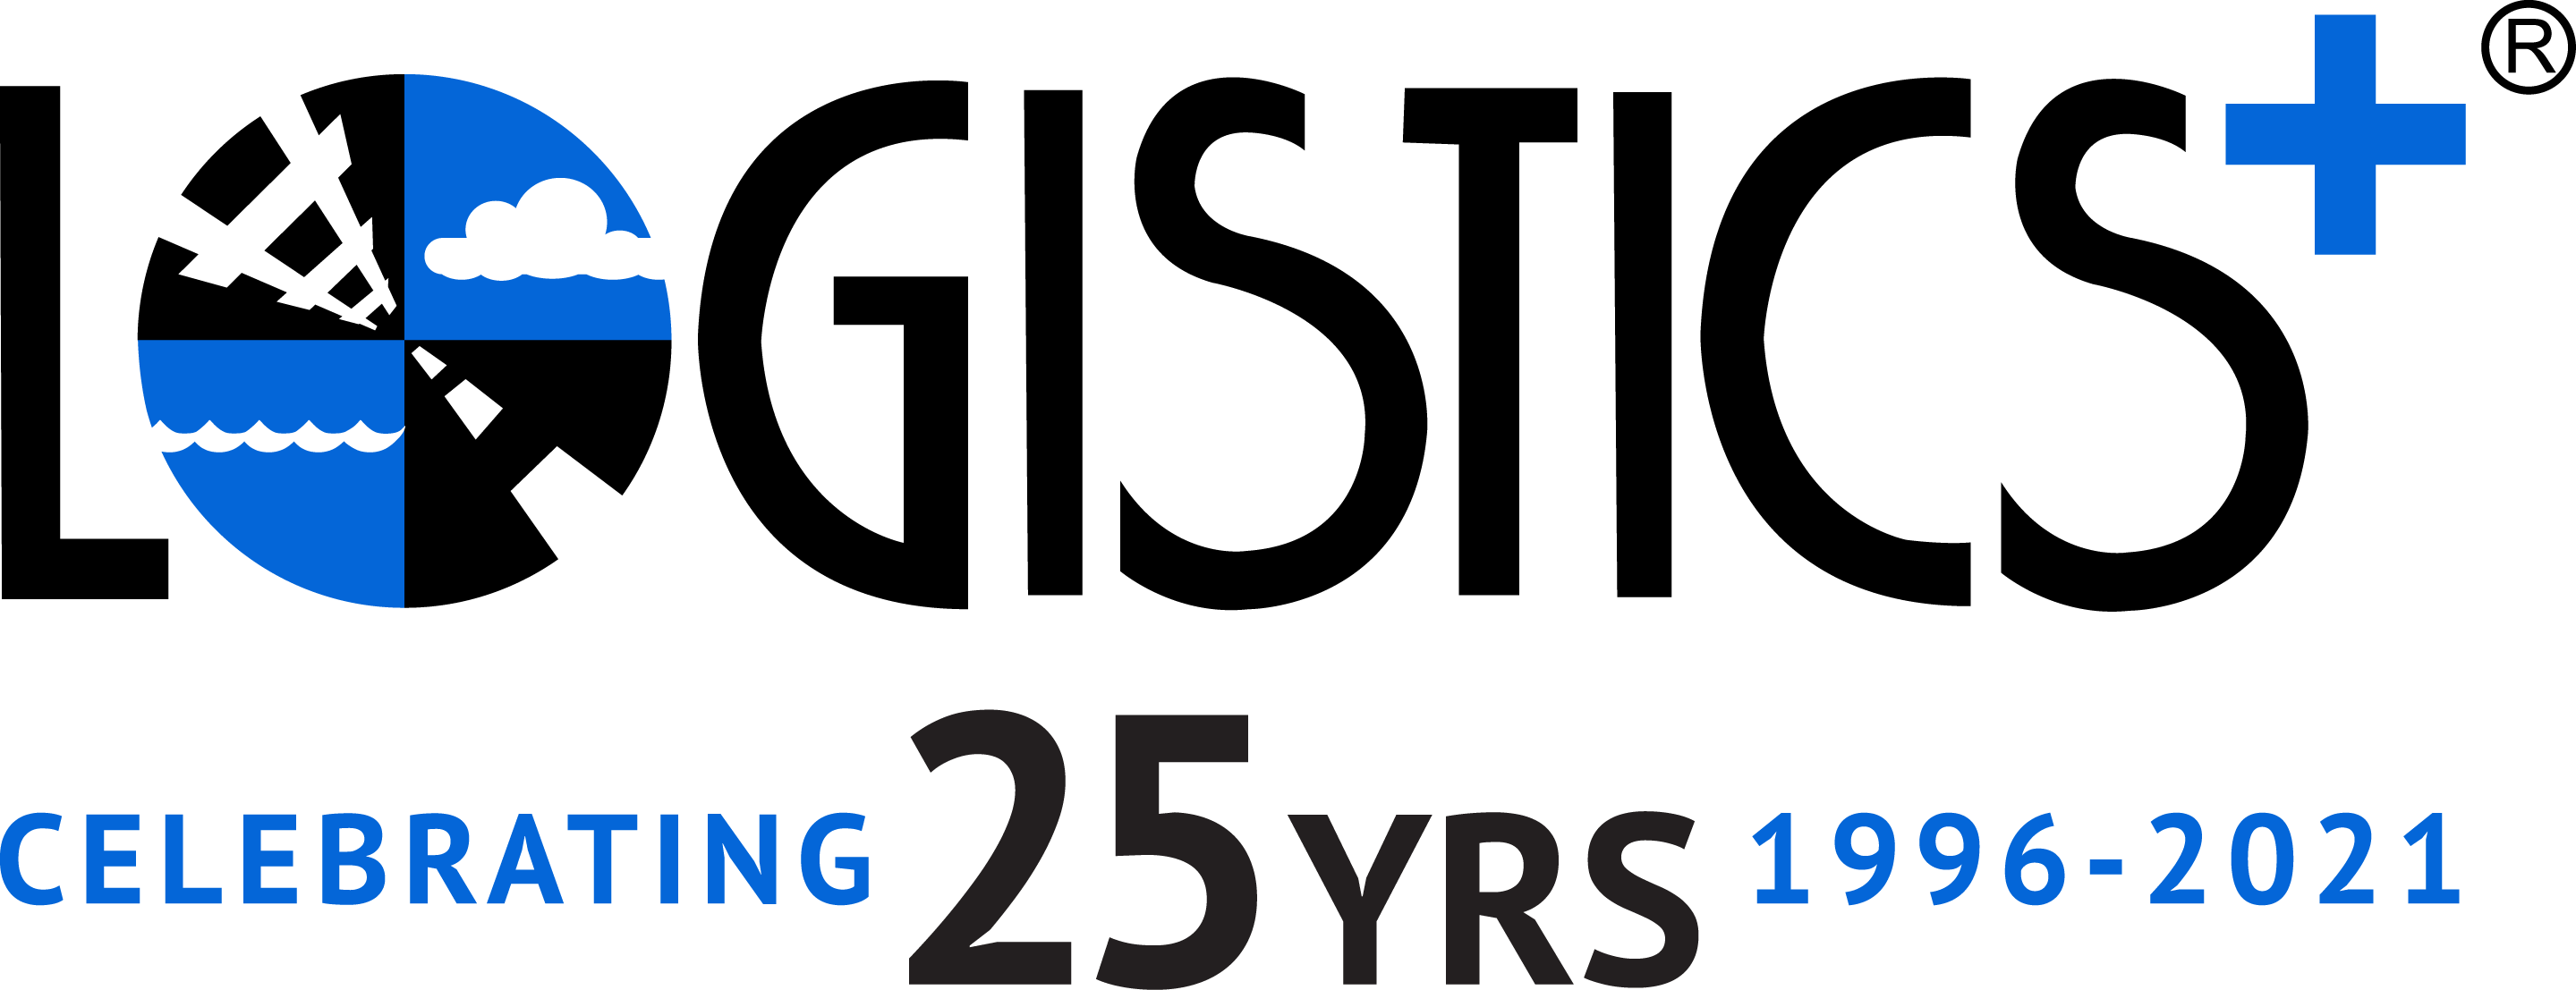 Logistics Plus 25th Anniversary Logo 01